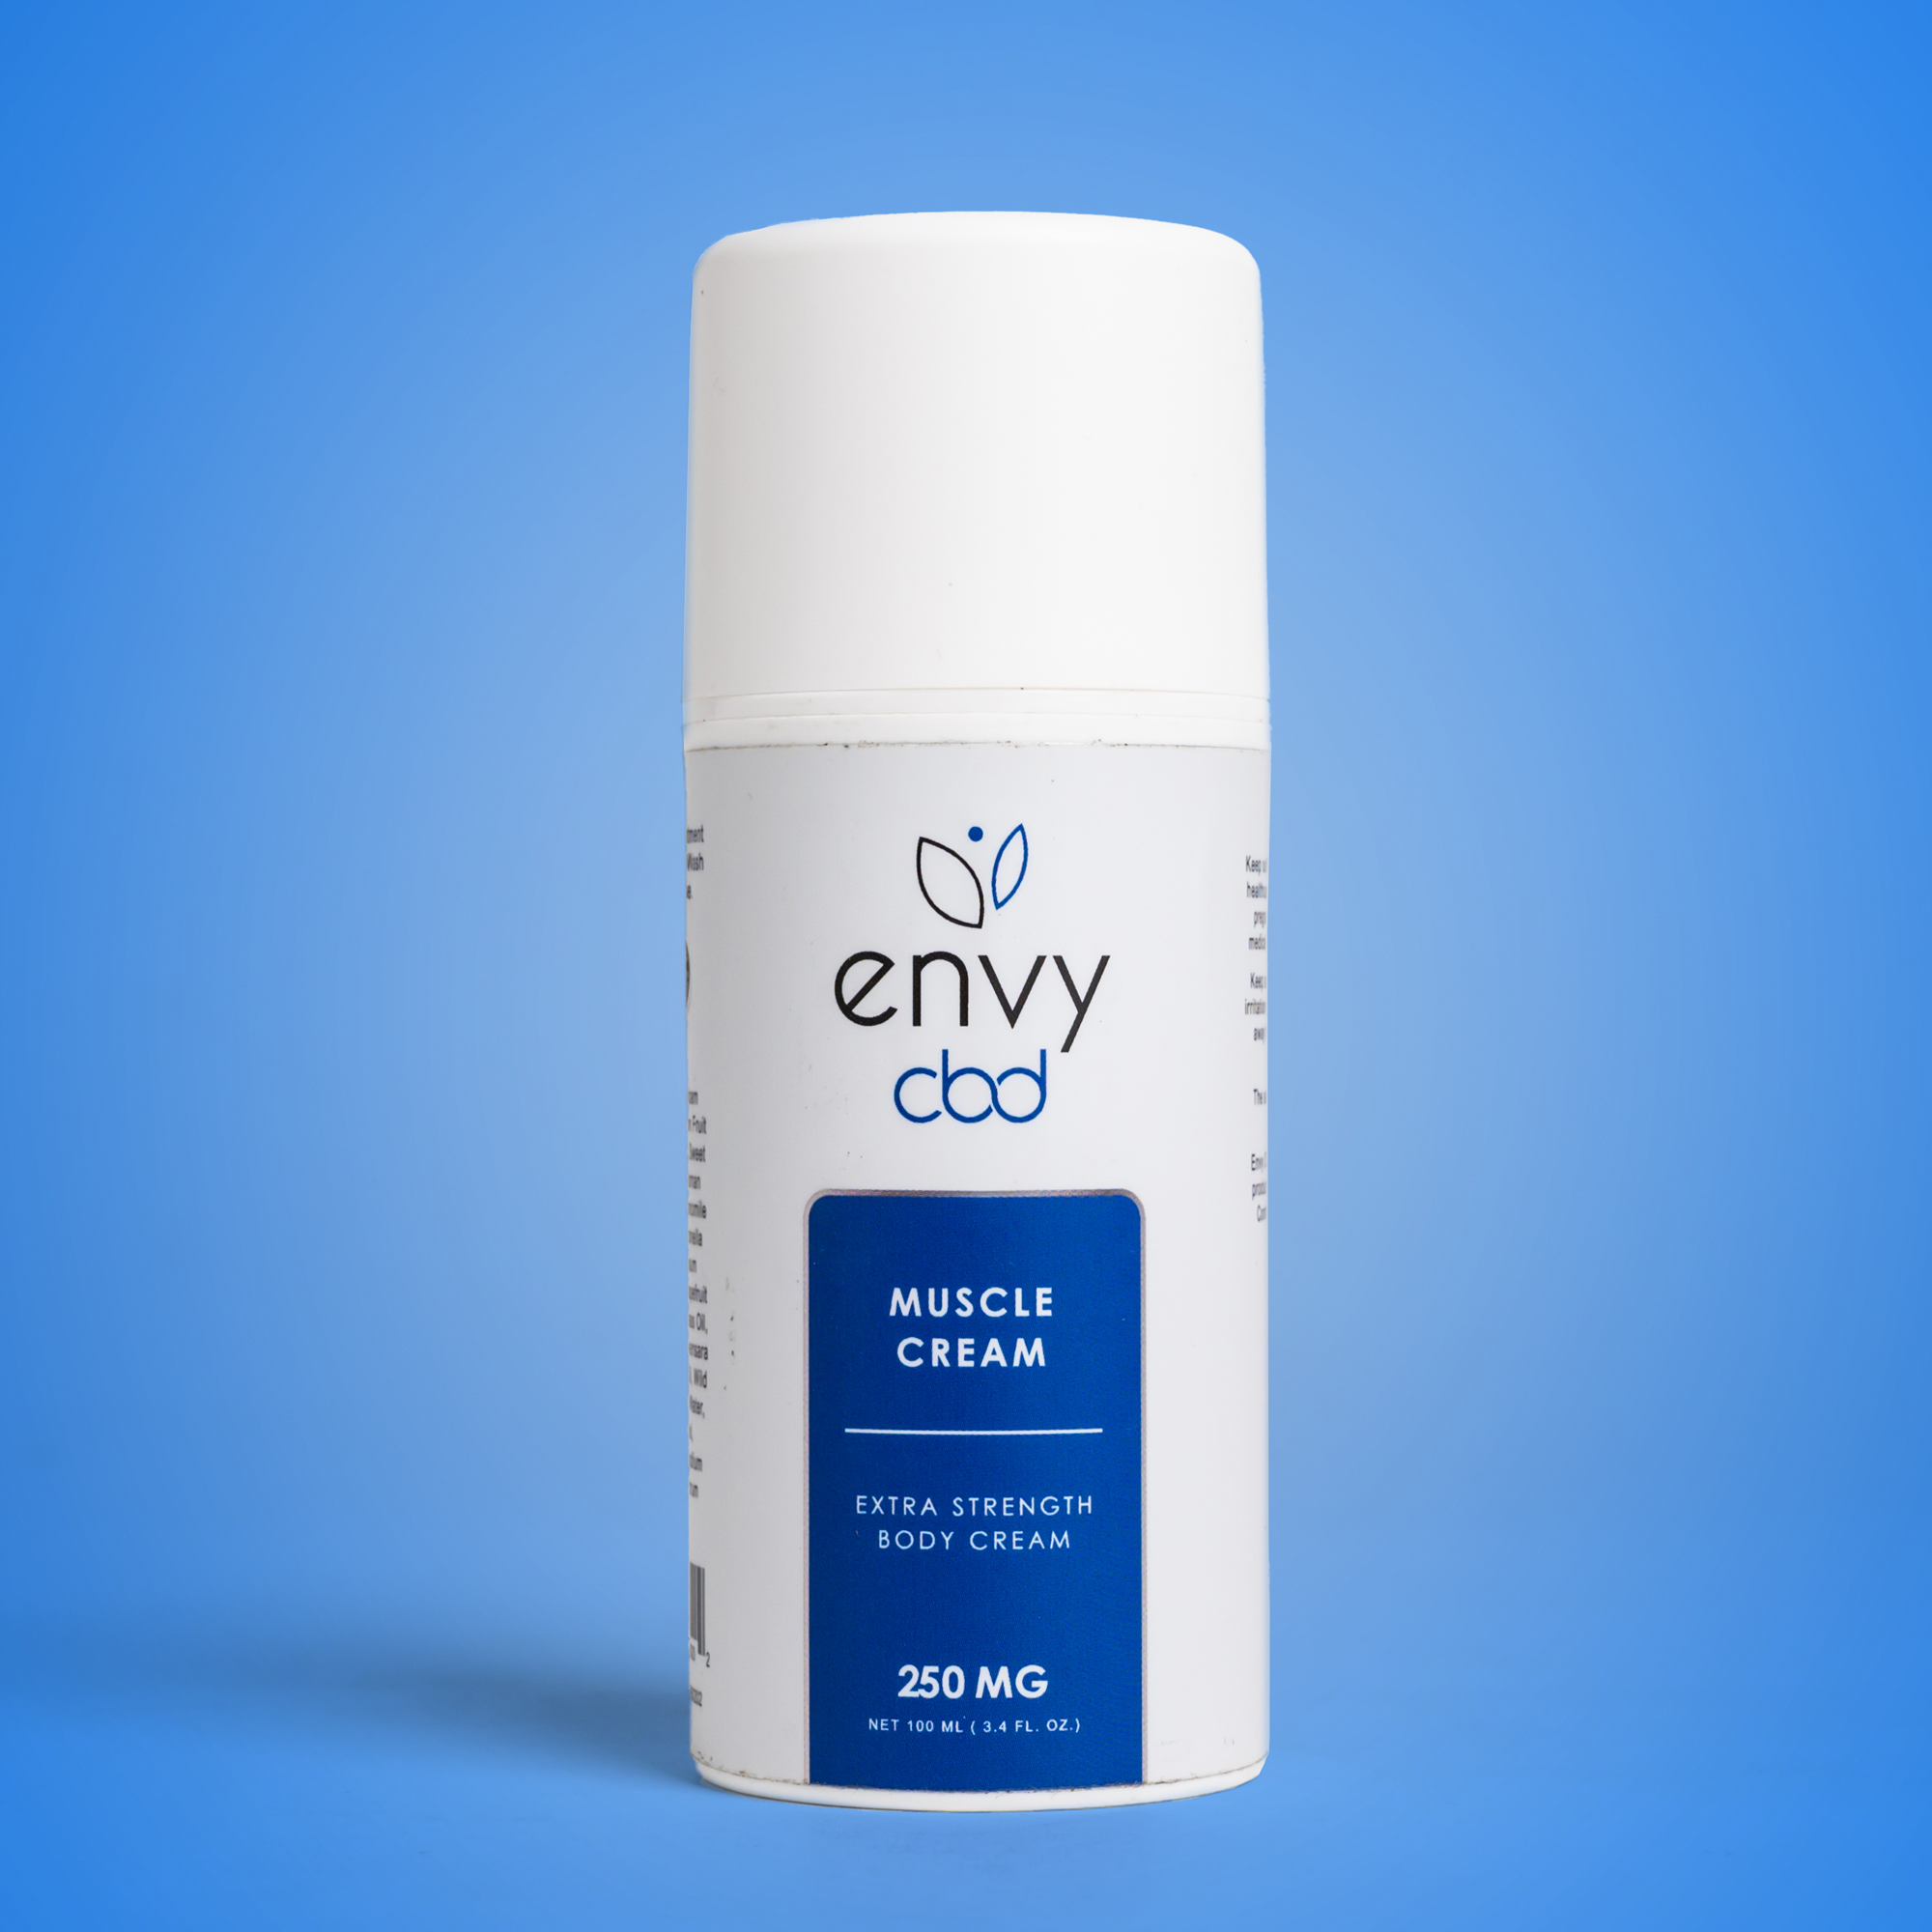 Envy CBD – Muscle Cream 250MG Broad Spectrum CBD Topical Best Price